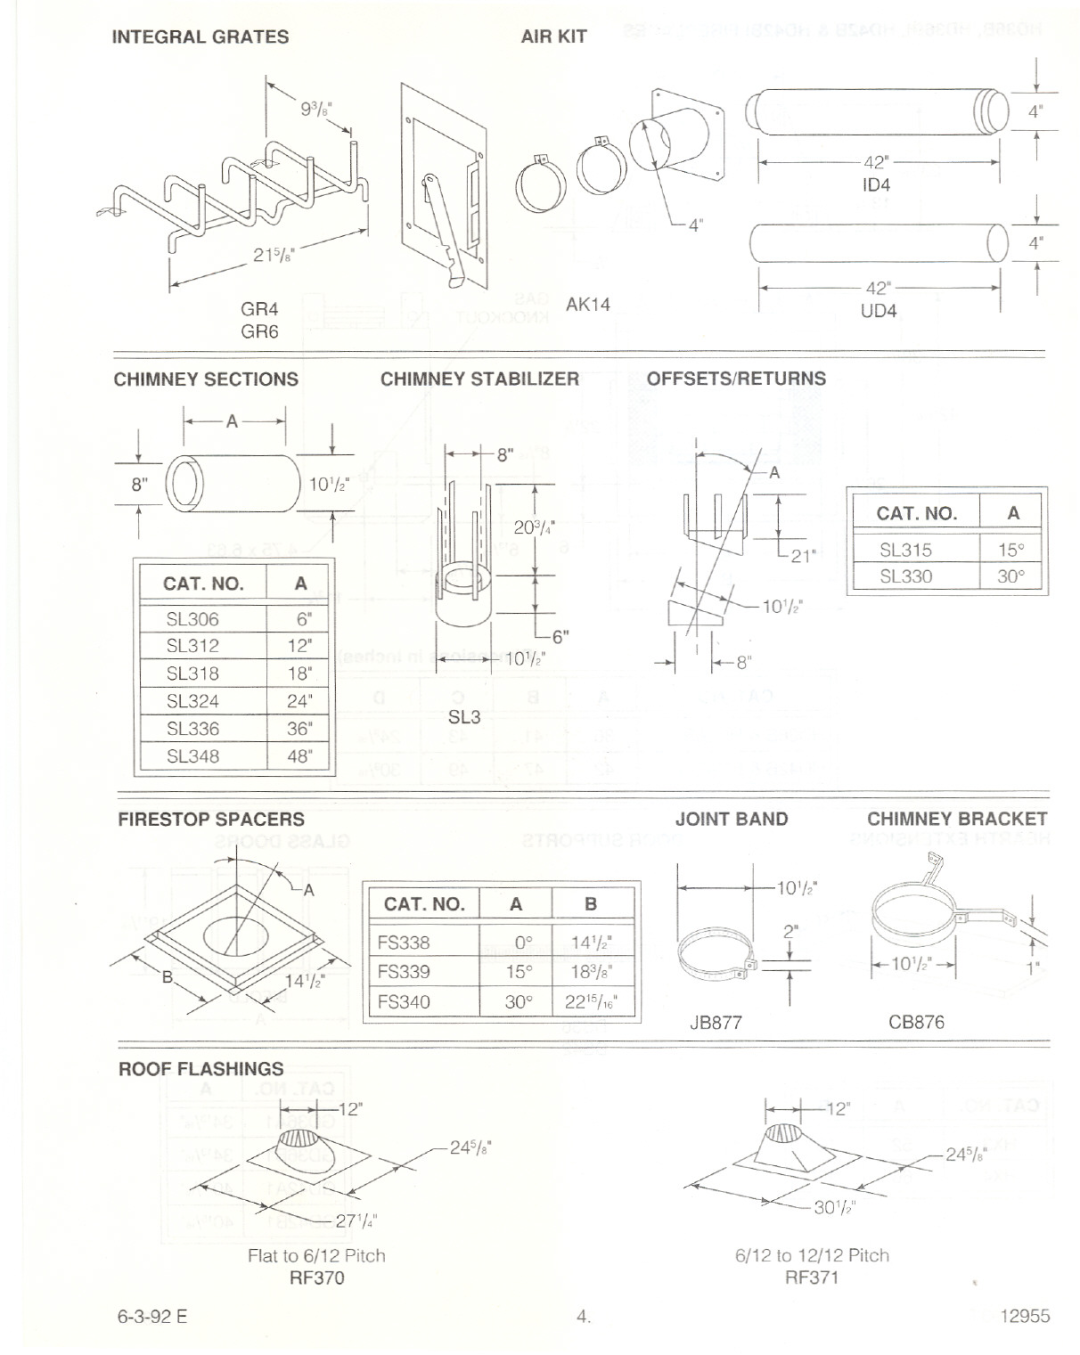 Heatiator HD36B manual 